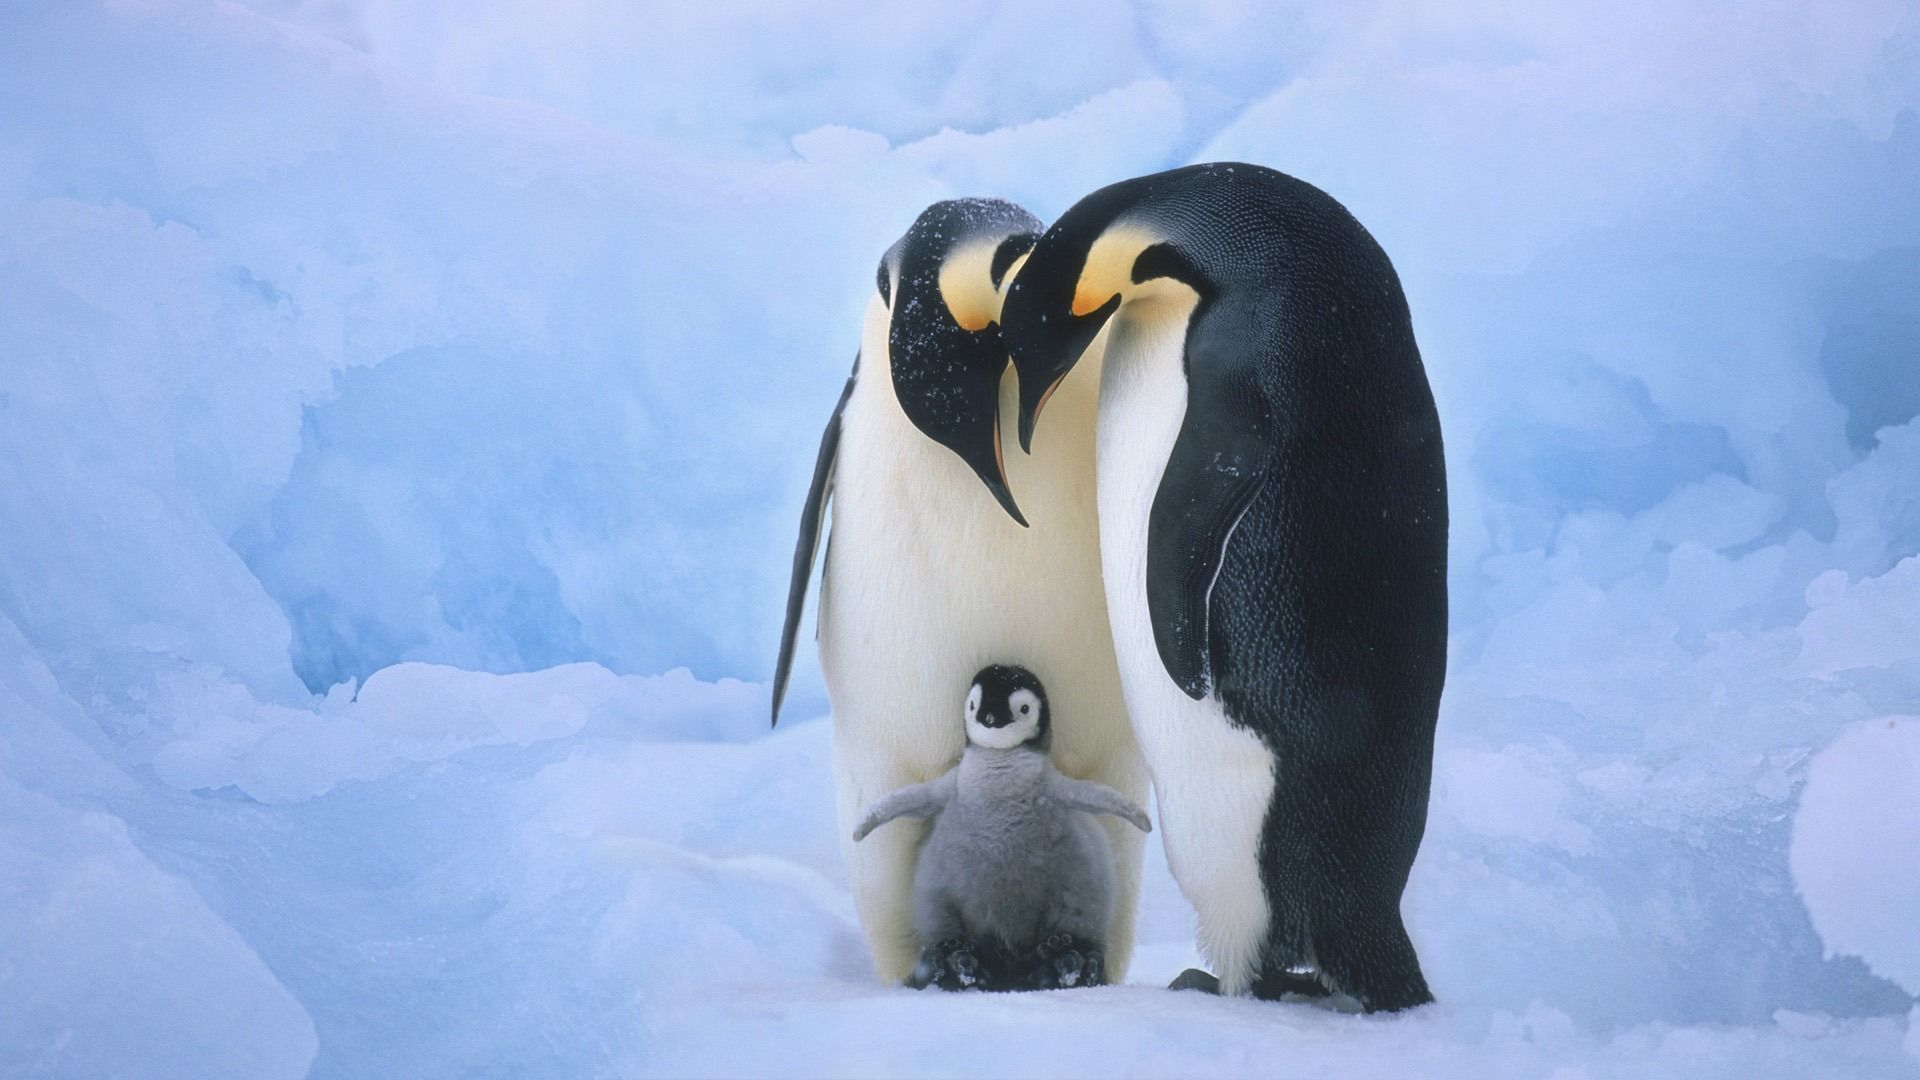 Happy Family Penguins HD Wallpaper Family. Penguins, Penguin wallpaper, Cute baby penguin